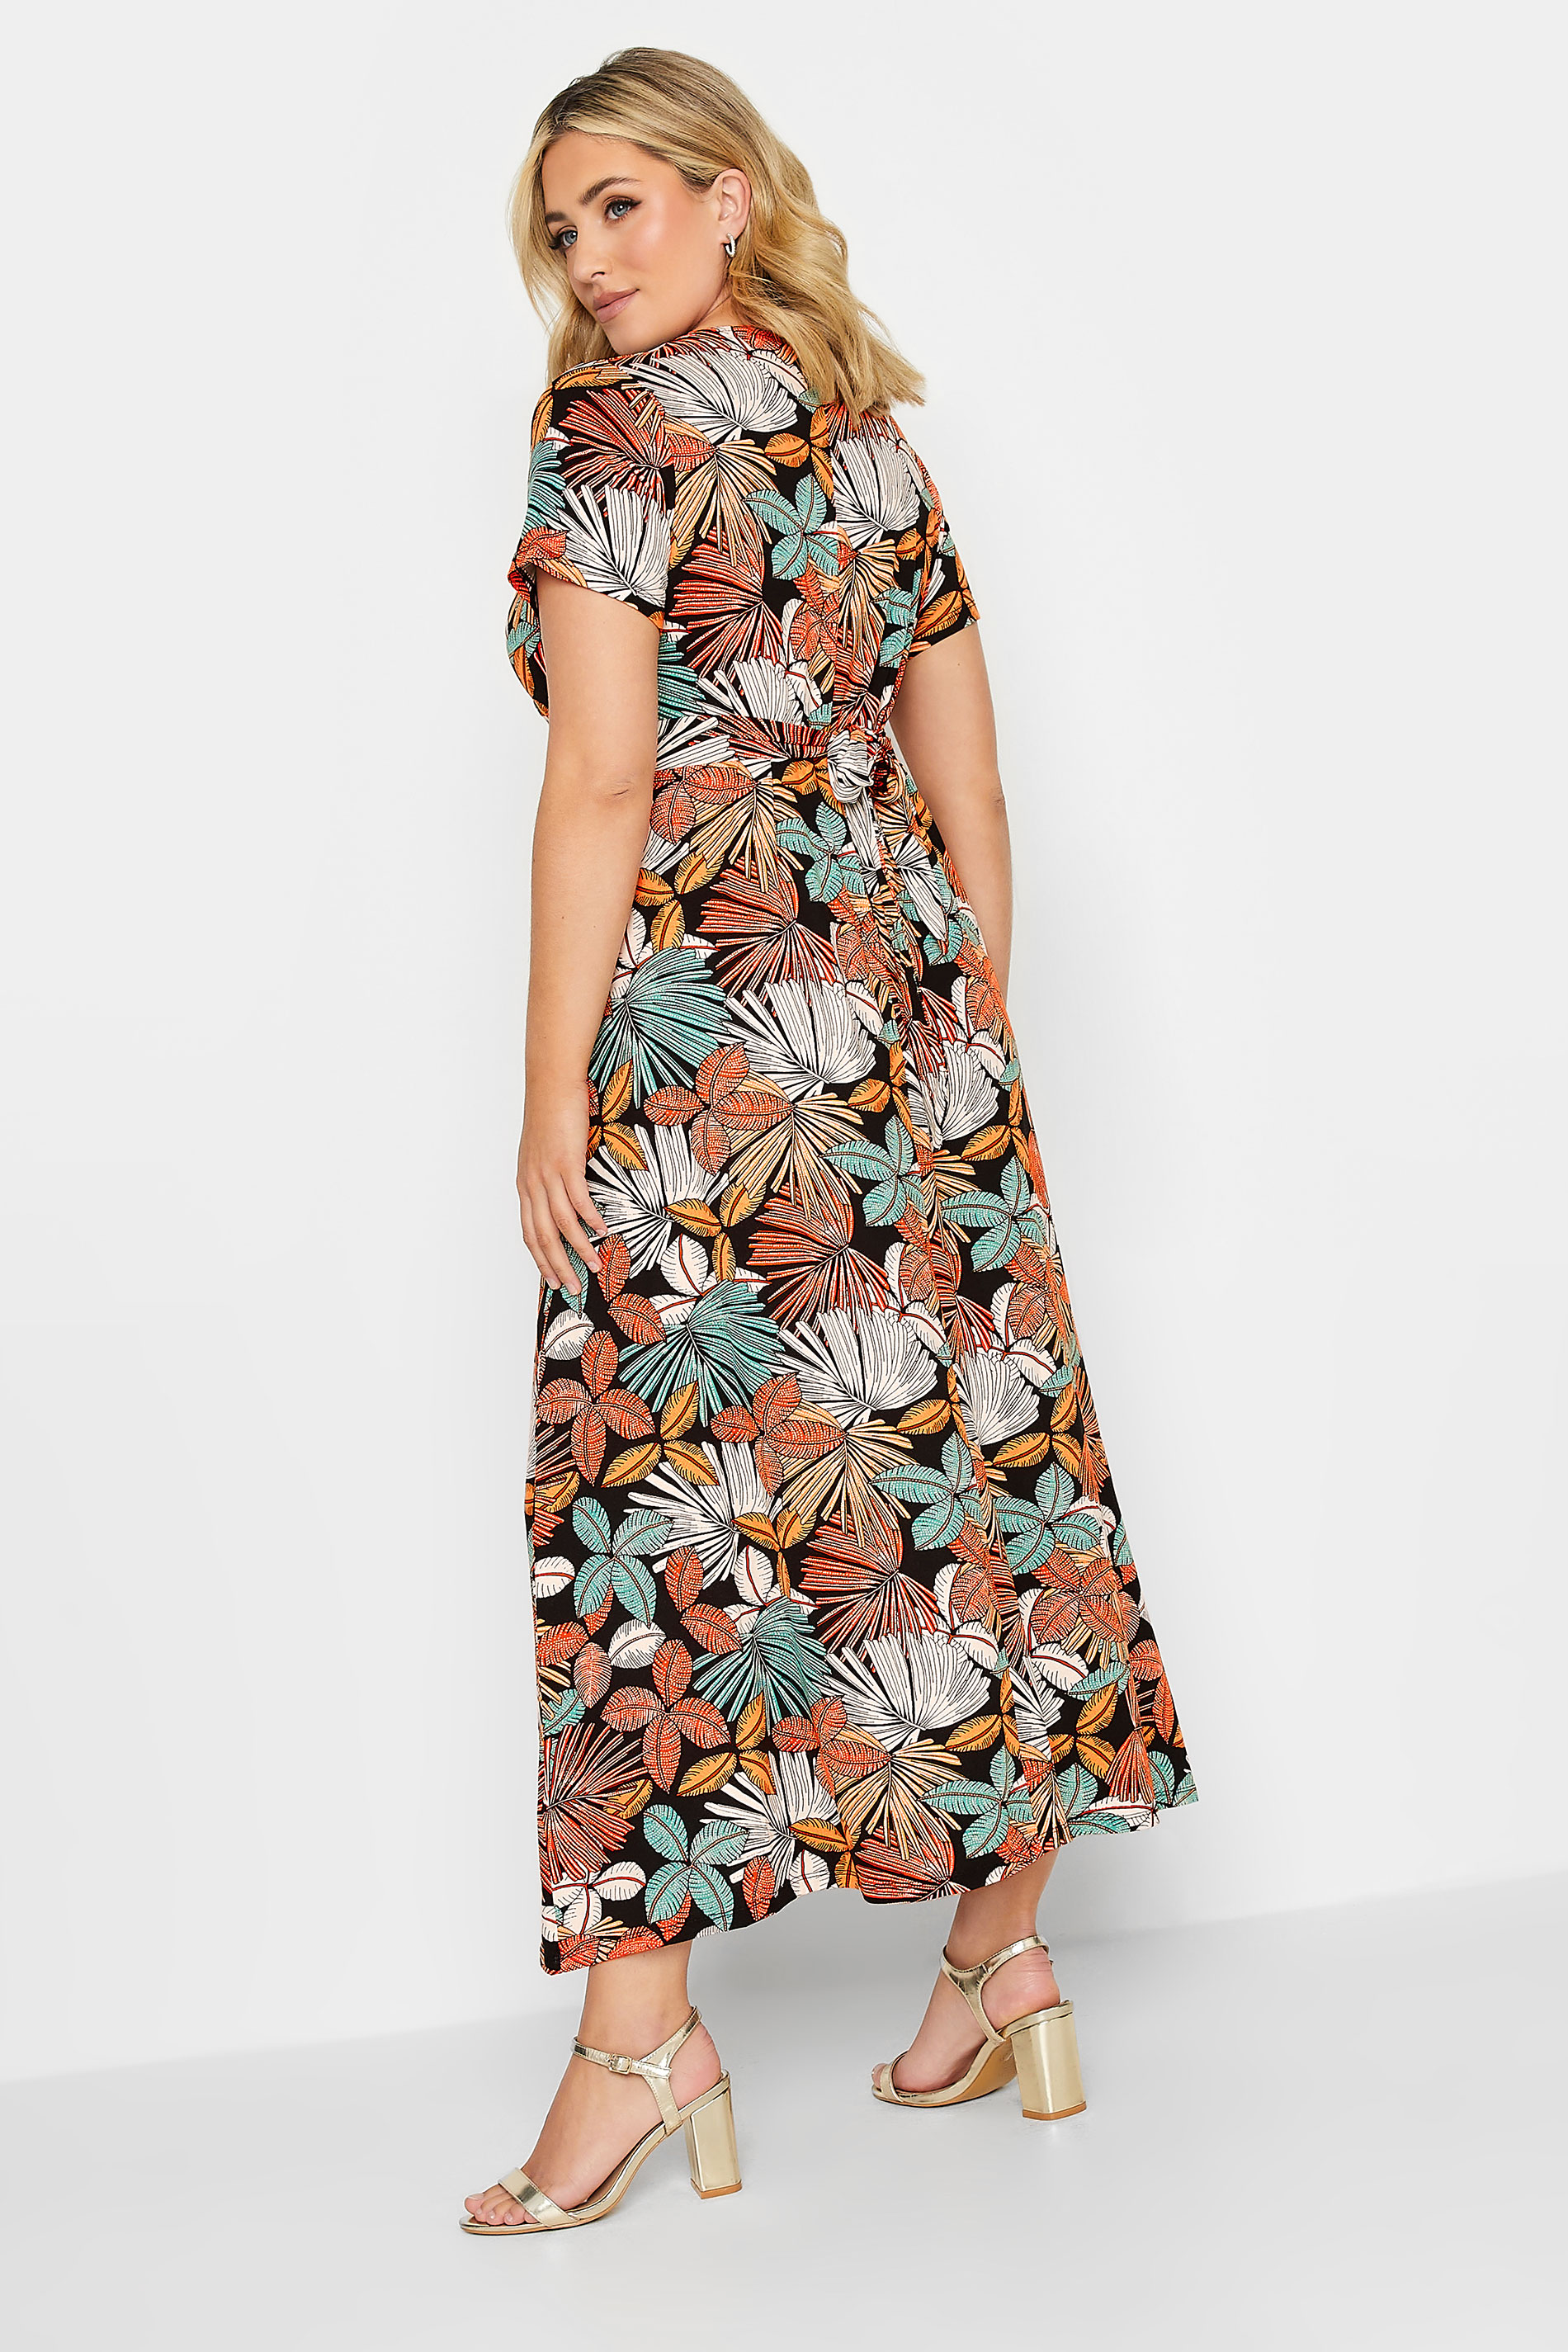 YOURS Plus Size Black & Orange Leaf Print Maxi Dress | Yours Clothing 3